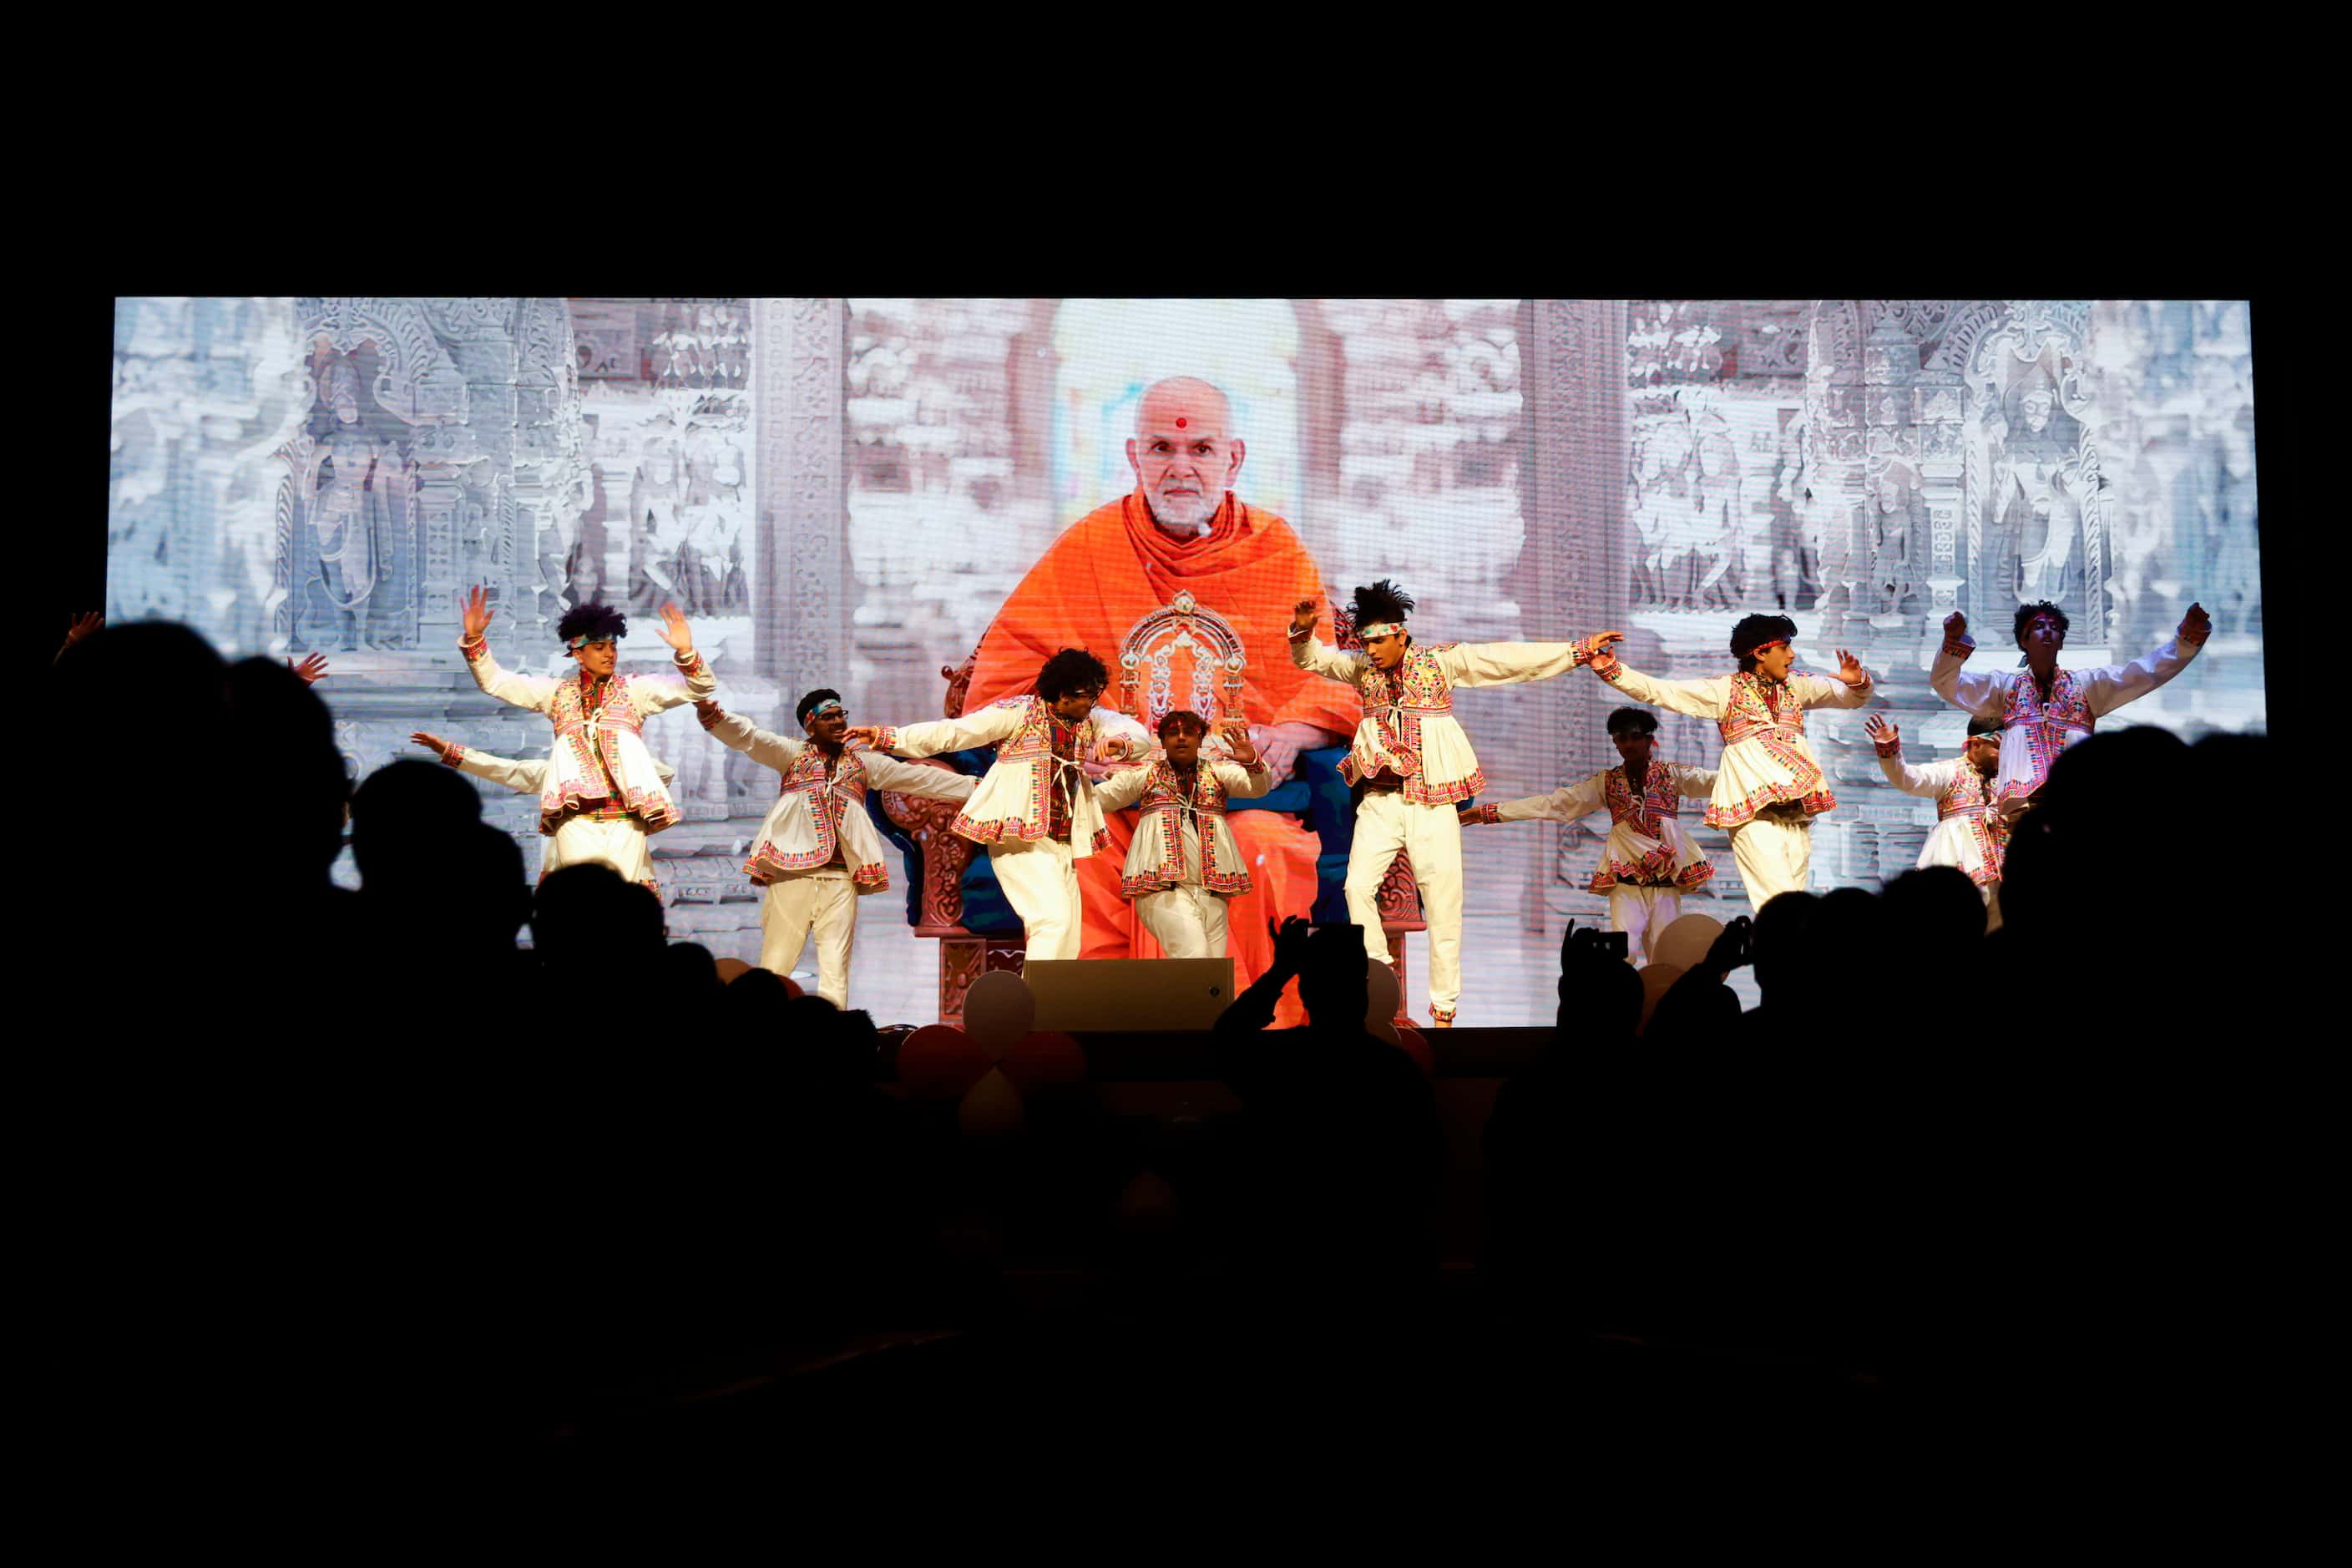 Young parishioners perform an Indian cultural dance at BAPS Shri Swaminarayan Mandir during...